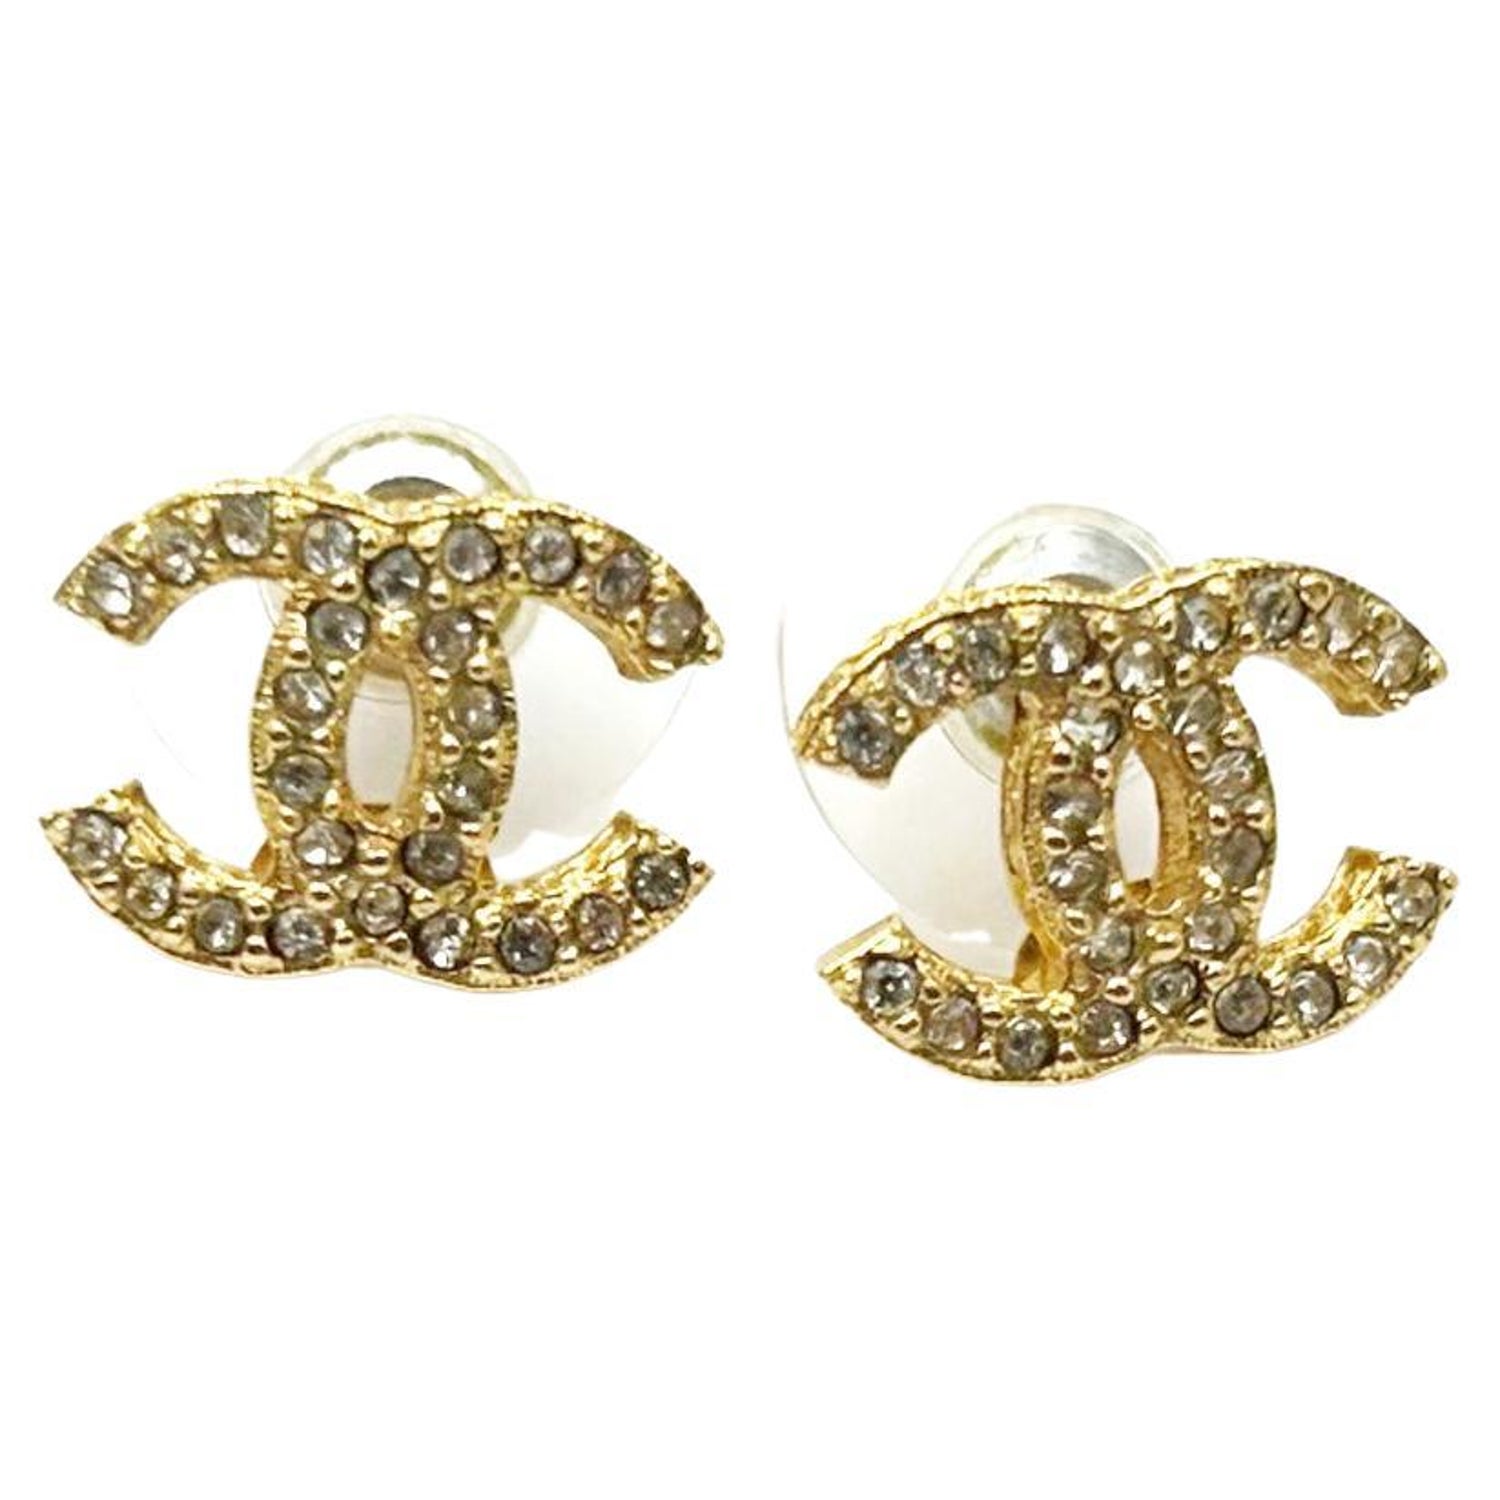 Chanel Earrings 2017 - 9 For Sale on 1stDibs